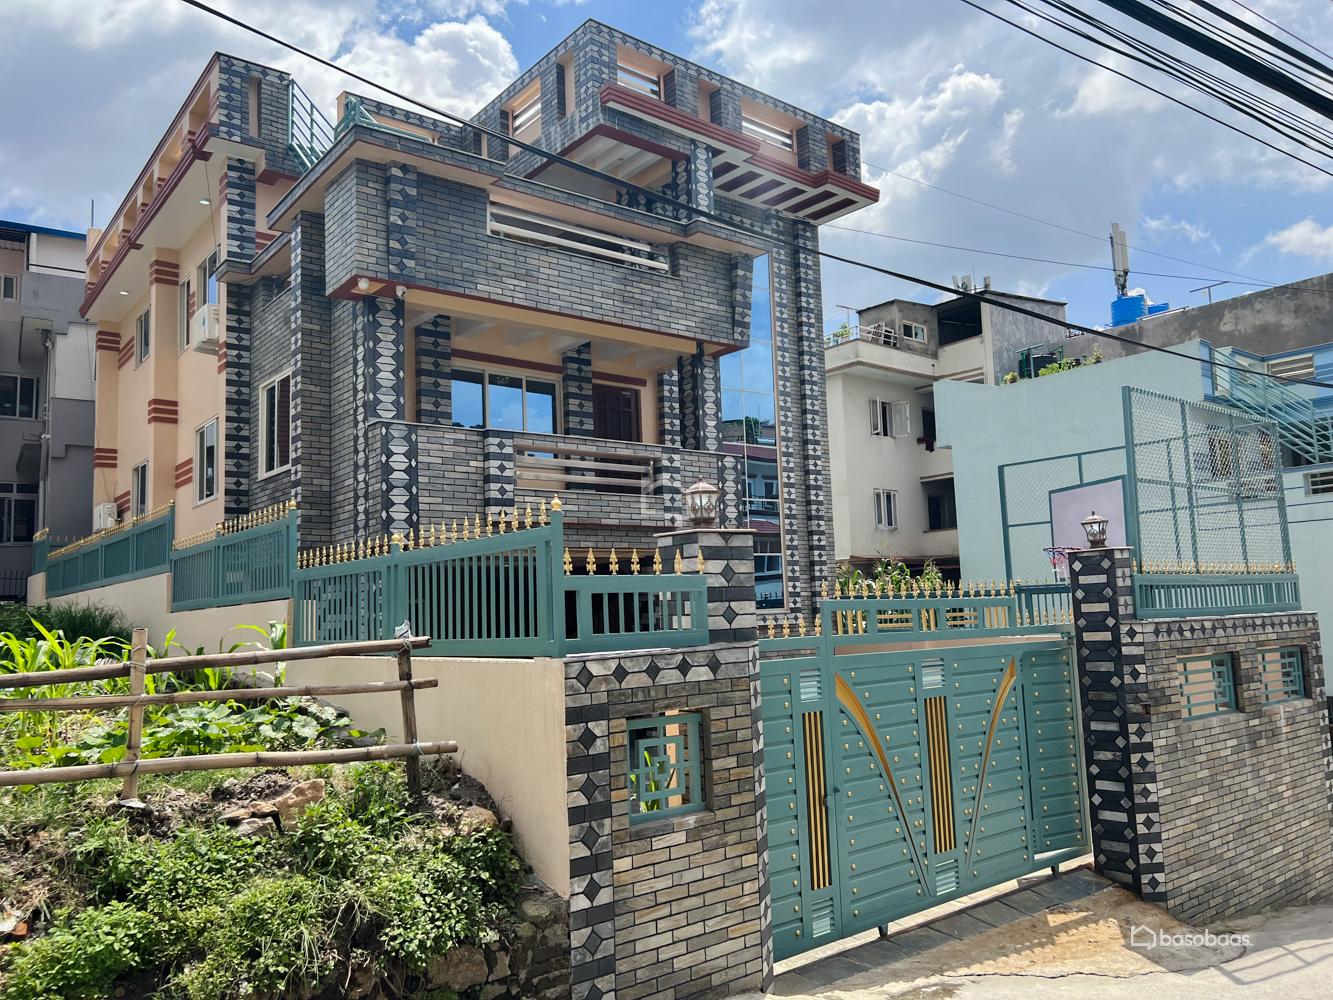 NEWLY BUILT RESIDENTIAL : House for Sale in Dhapasi, Kathmandu Image 11